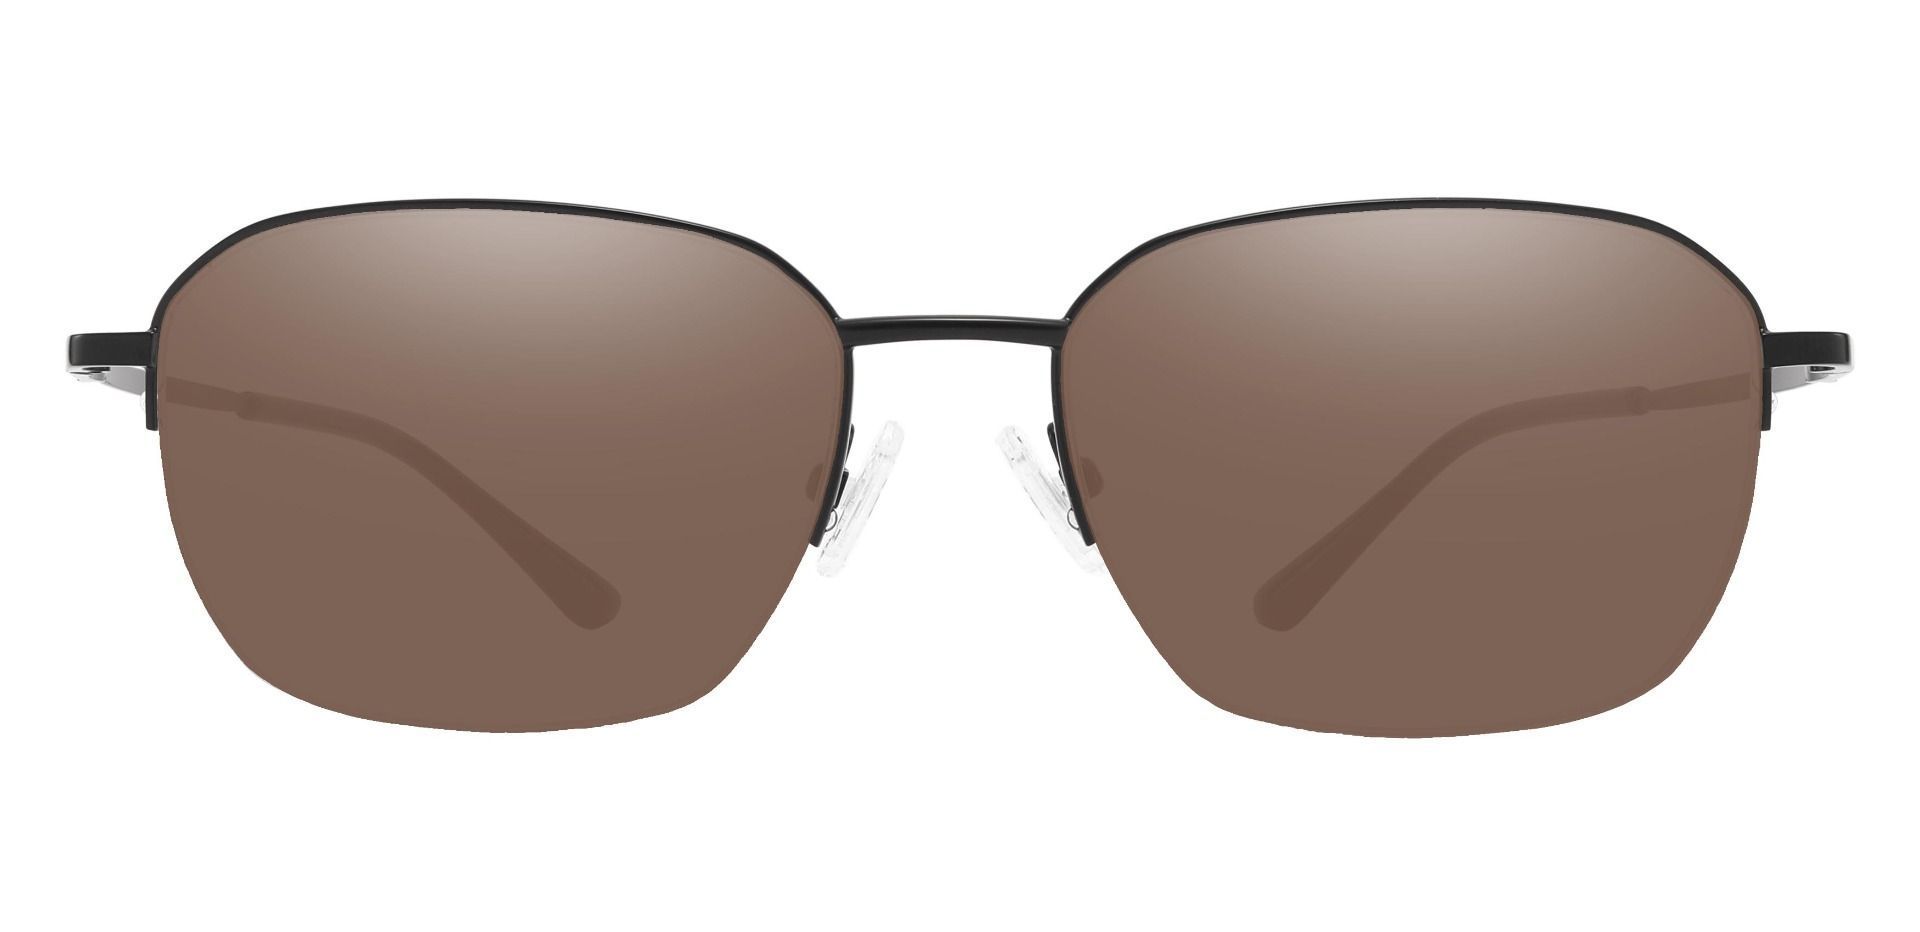 Wilton Geometric Reading Sunglasses - Black Frame With Brown Lenses